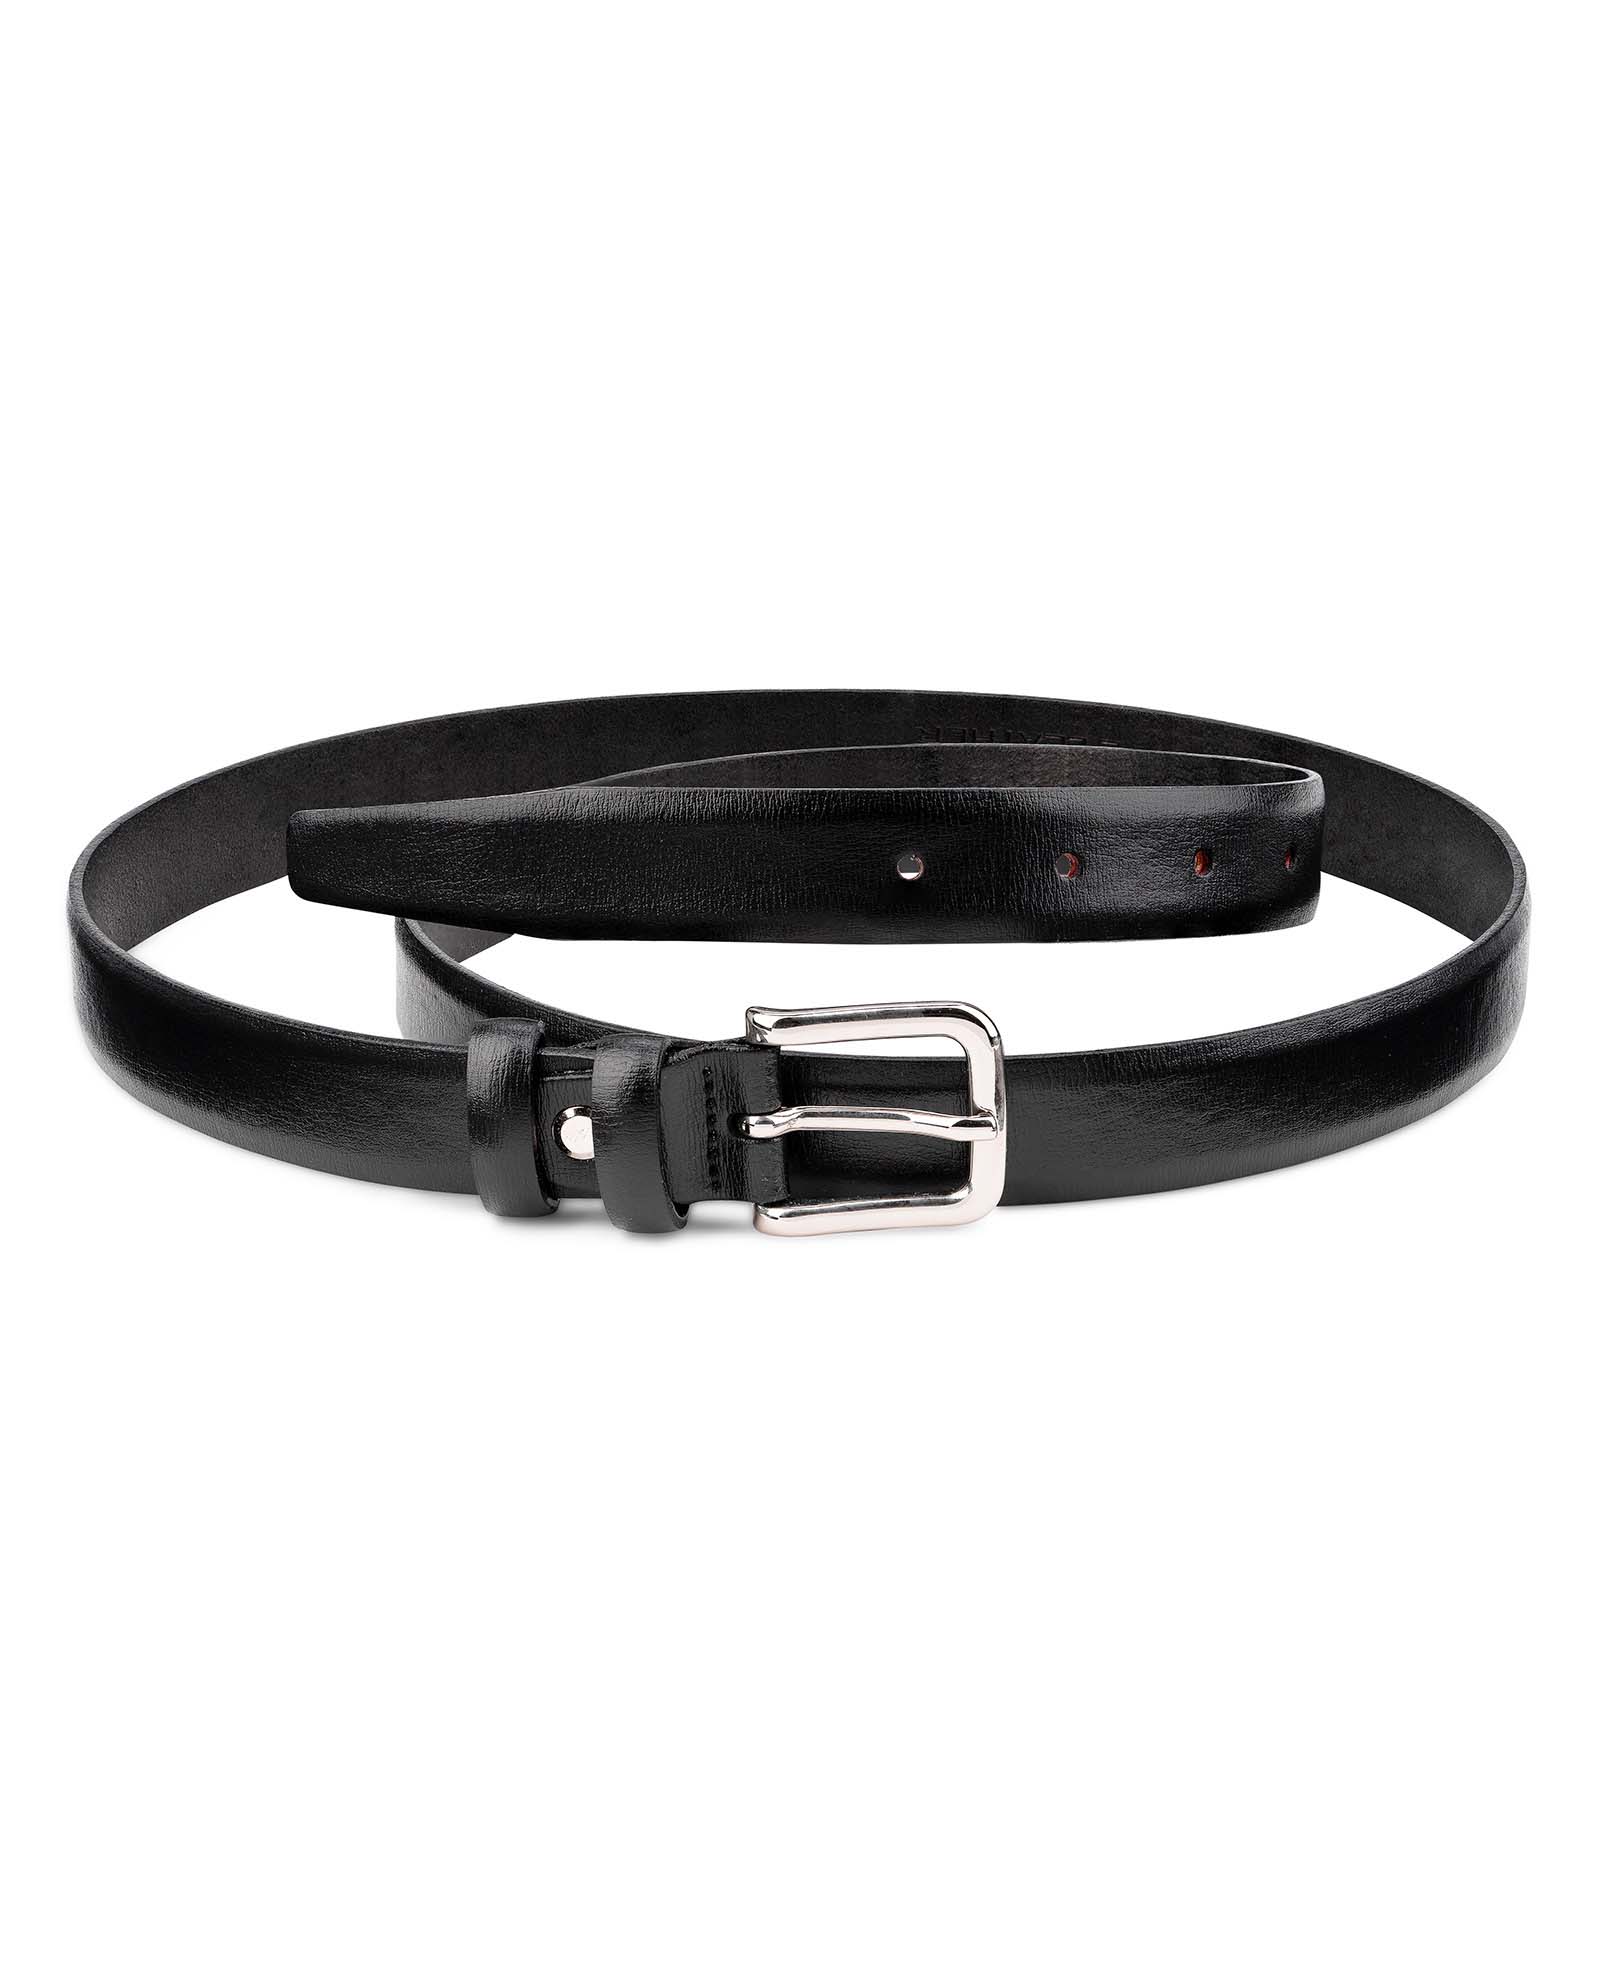 Zhuhaitf Mens 35mm Wide Leather Automatic Buckle Belt Waist Strap No Buckle 